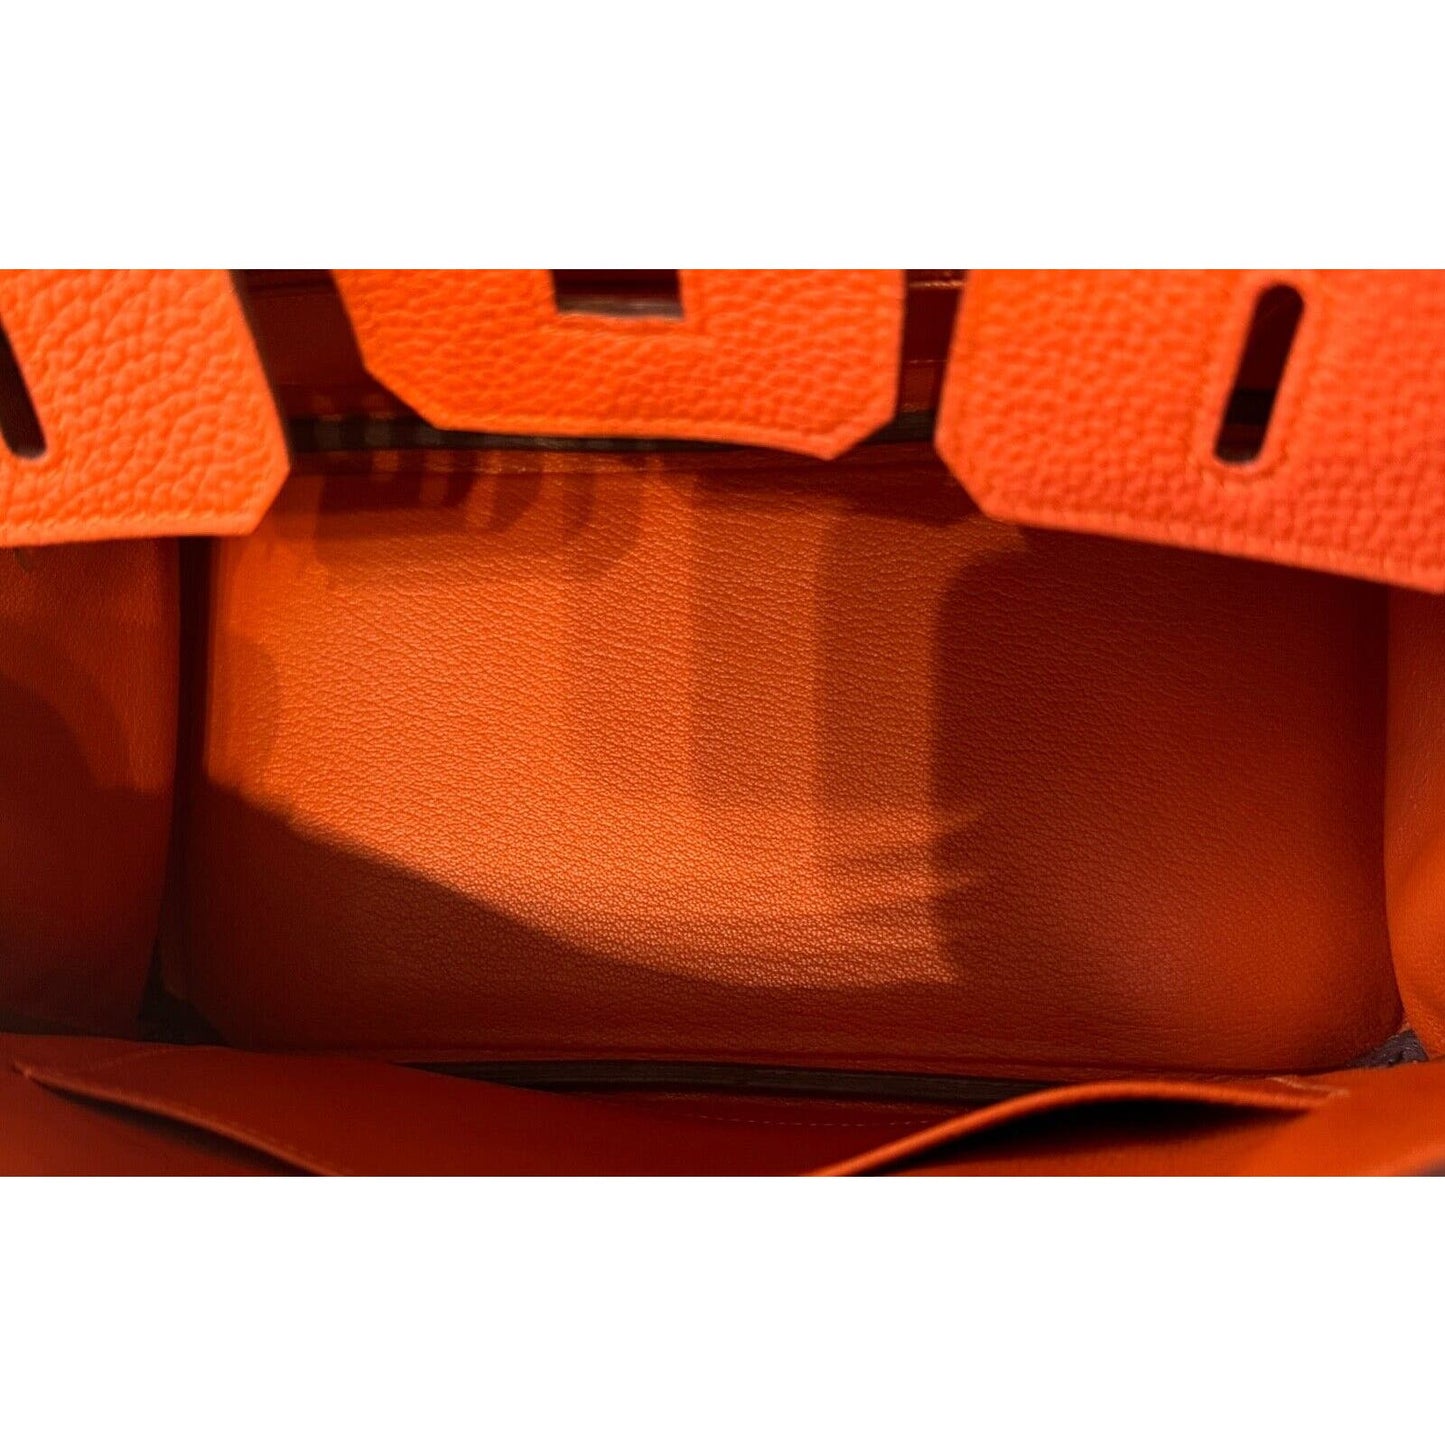 Hermes Birkin 25 Poppy Orange Togo Handbag Bag Palladium Hardware